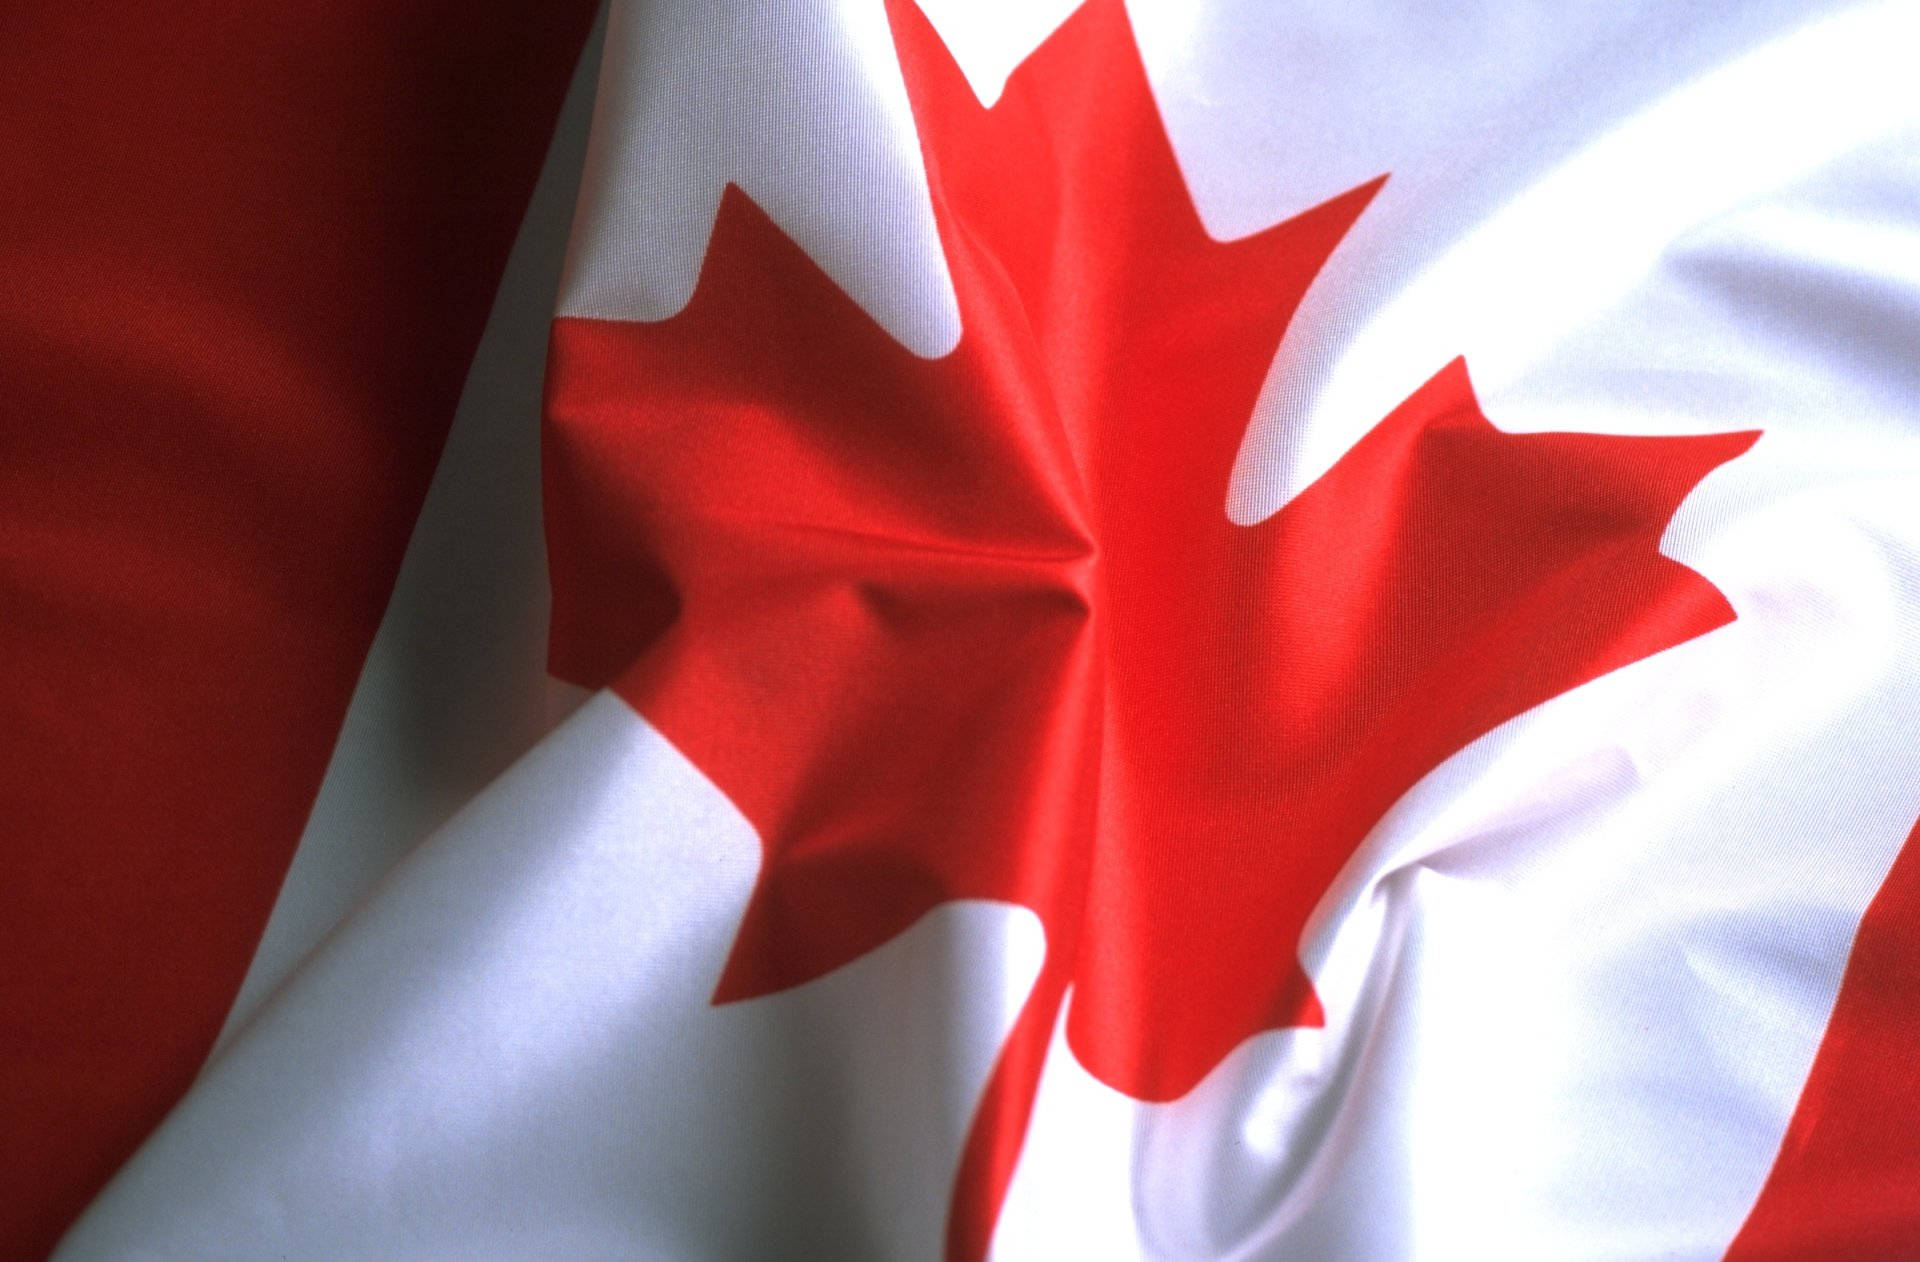 Vibrant Maple Leaf - Emblem Of Canada